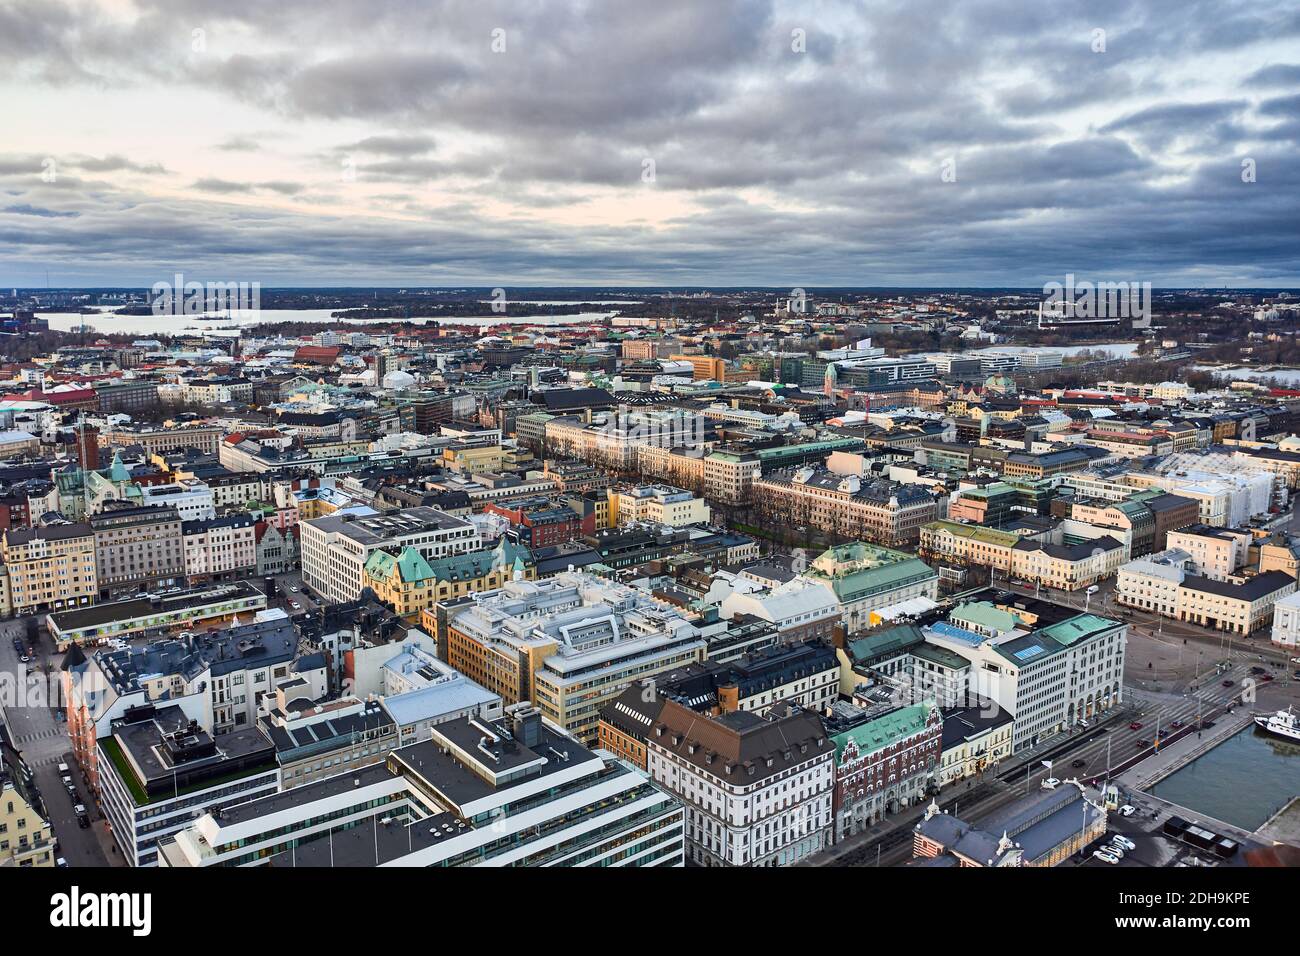 Aerial view of Kaartinkaupunki and Kluuvi neighborhoods of Helsinki, Finland. Stock Photo